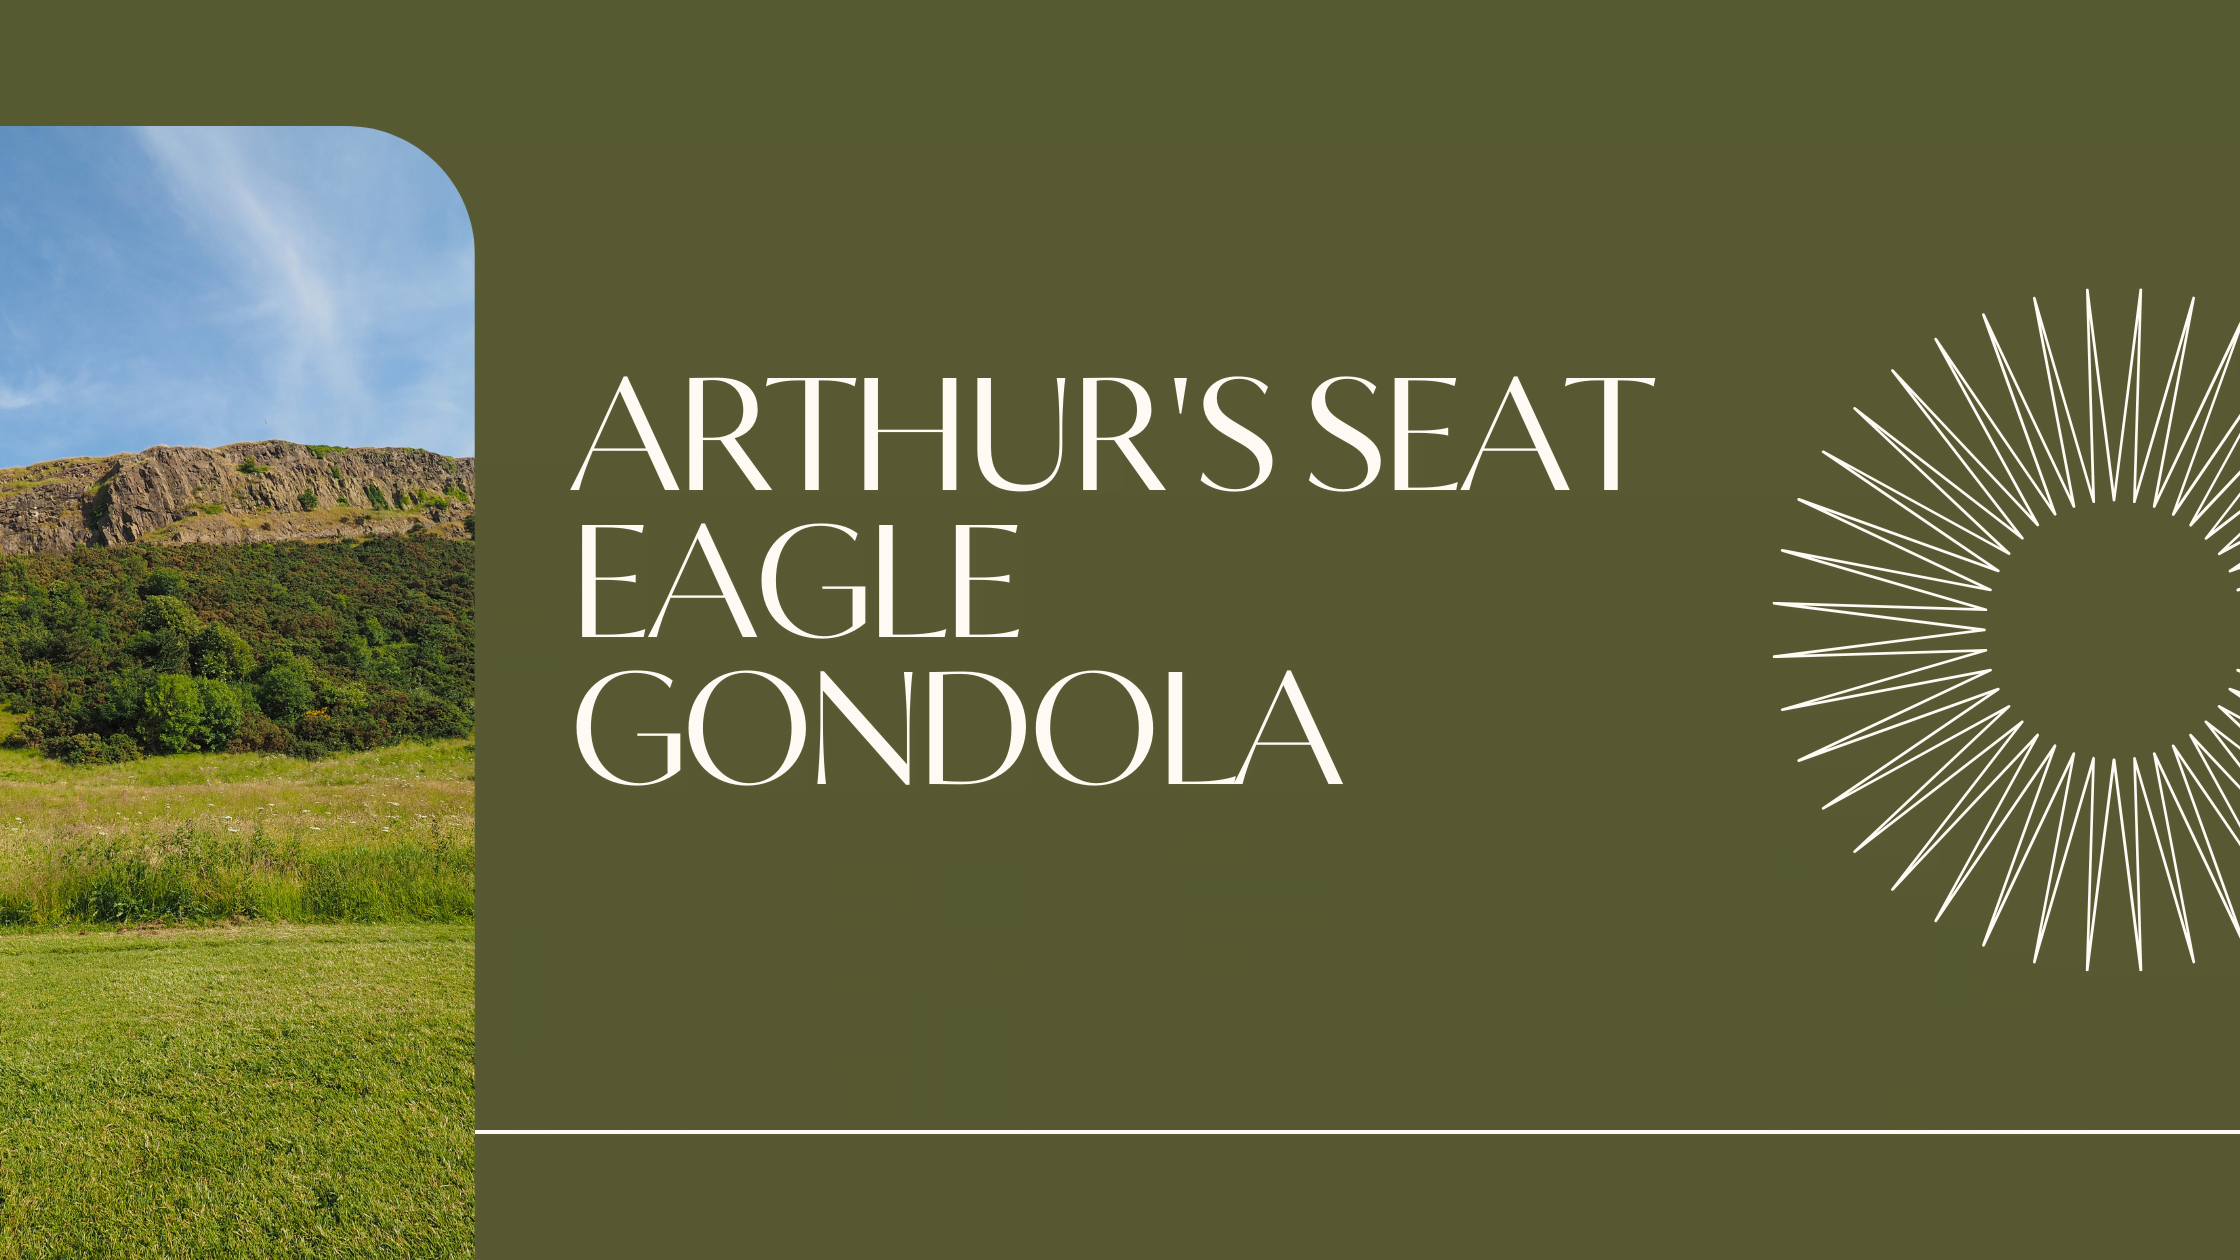 Arthur's Seat Eagle Gondola